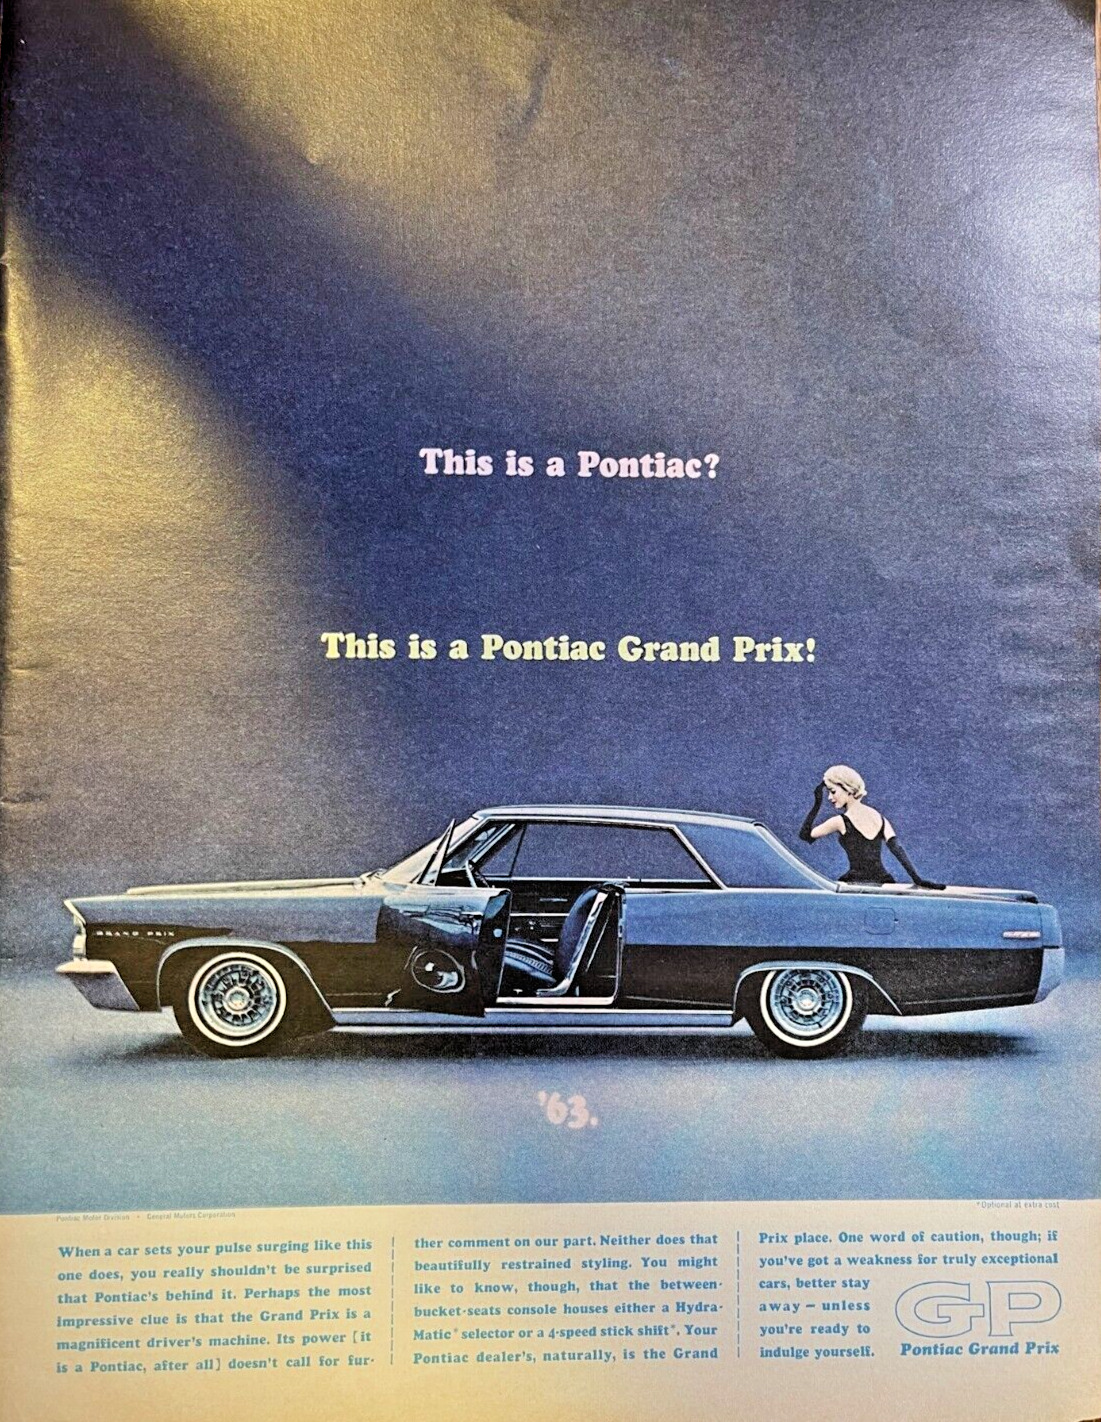 1962 Vintage Magazine Advertisement Pontiac Grand Prix This Is A Pontiac?